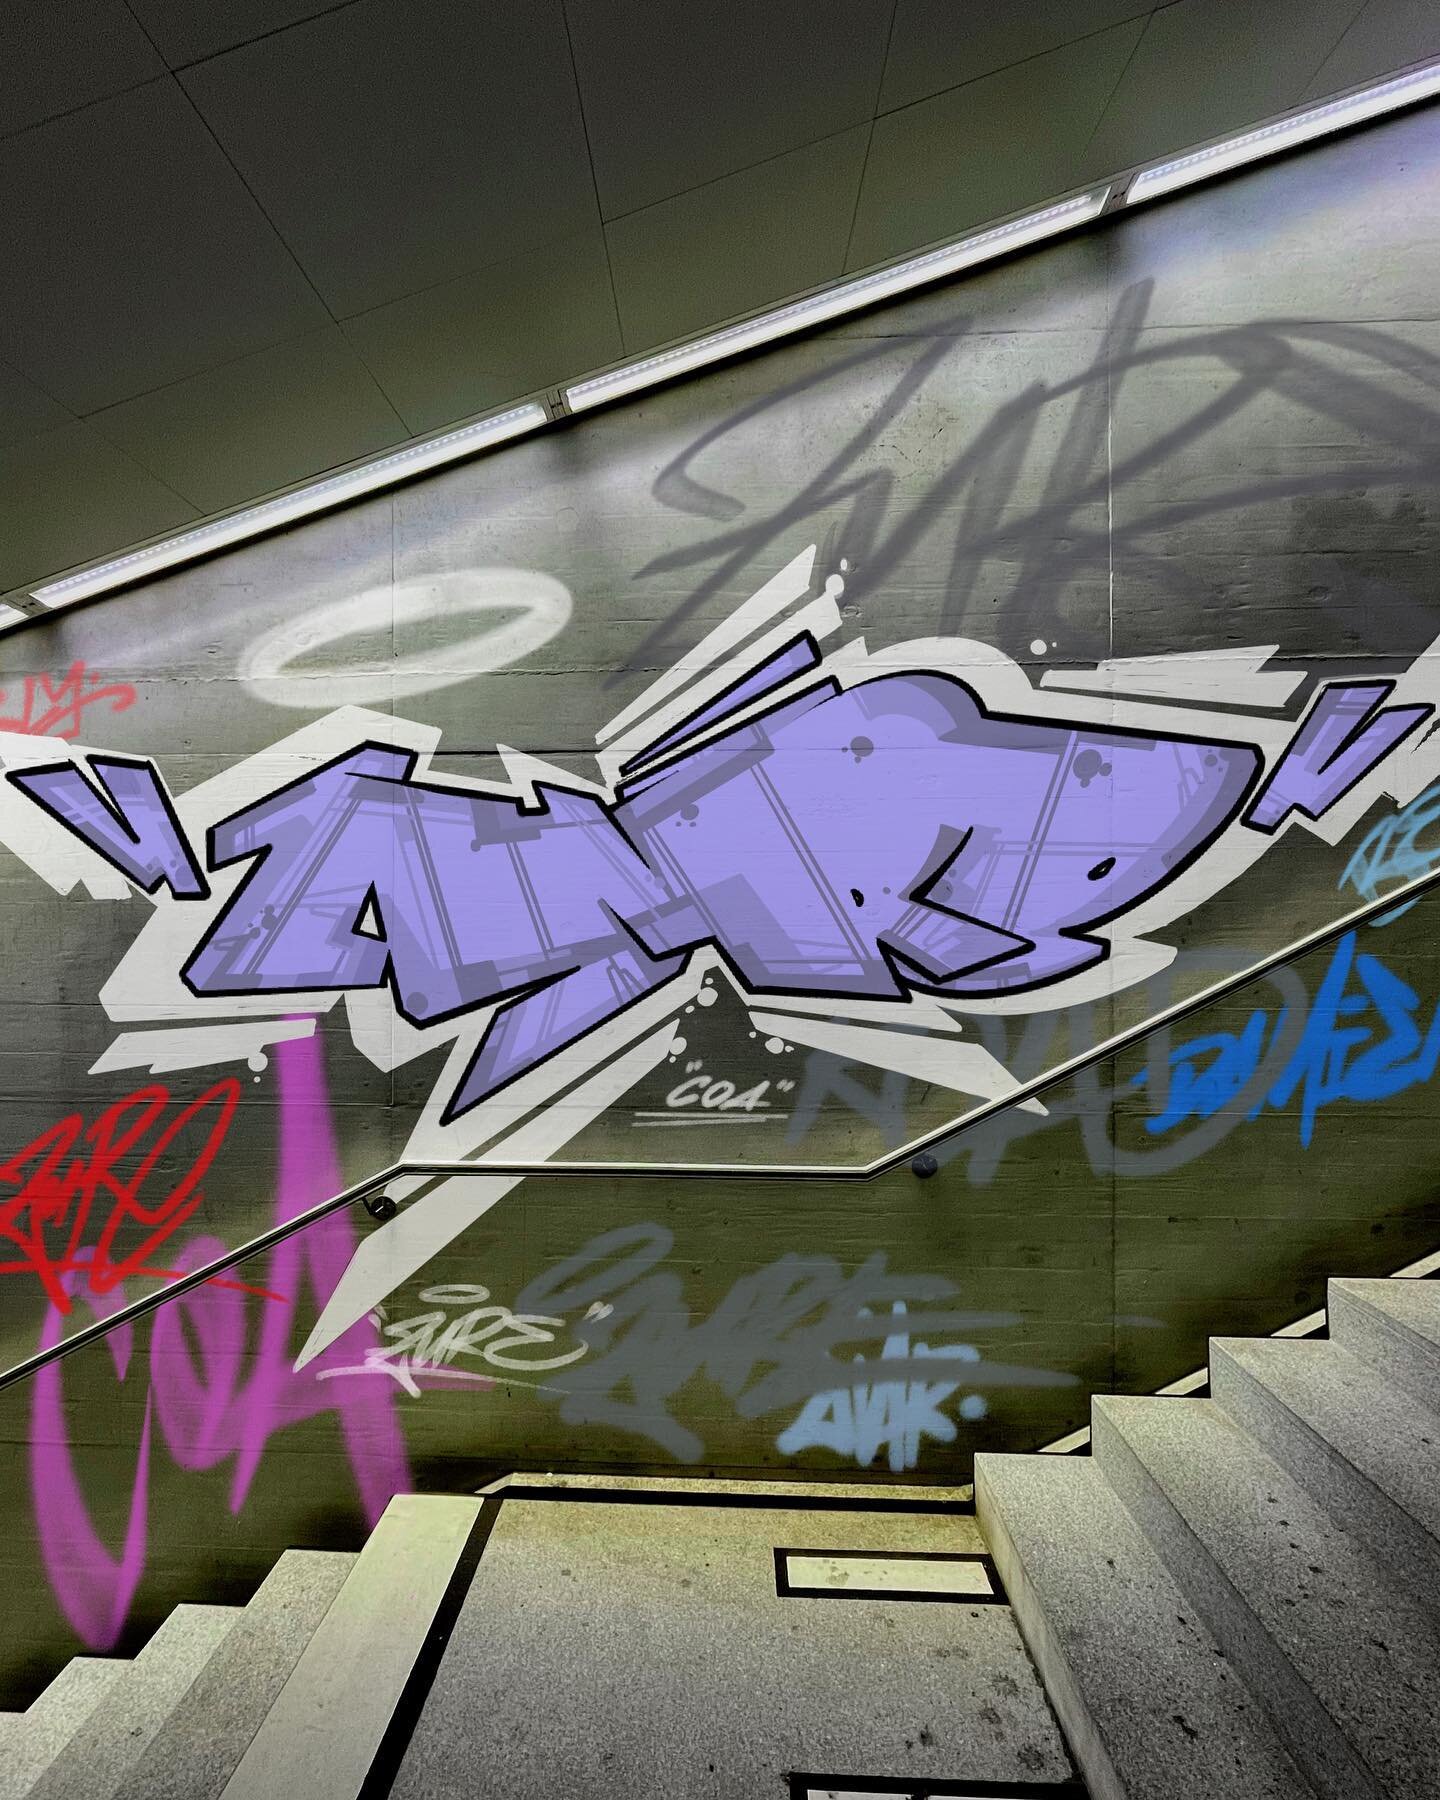 Digital Graffiti 

#digitalgraffiti #ipadprocreate #procreate #fun #stayhomeanddraw #goodtimes #graffiti #justatest #😉